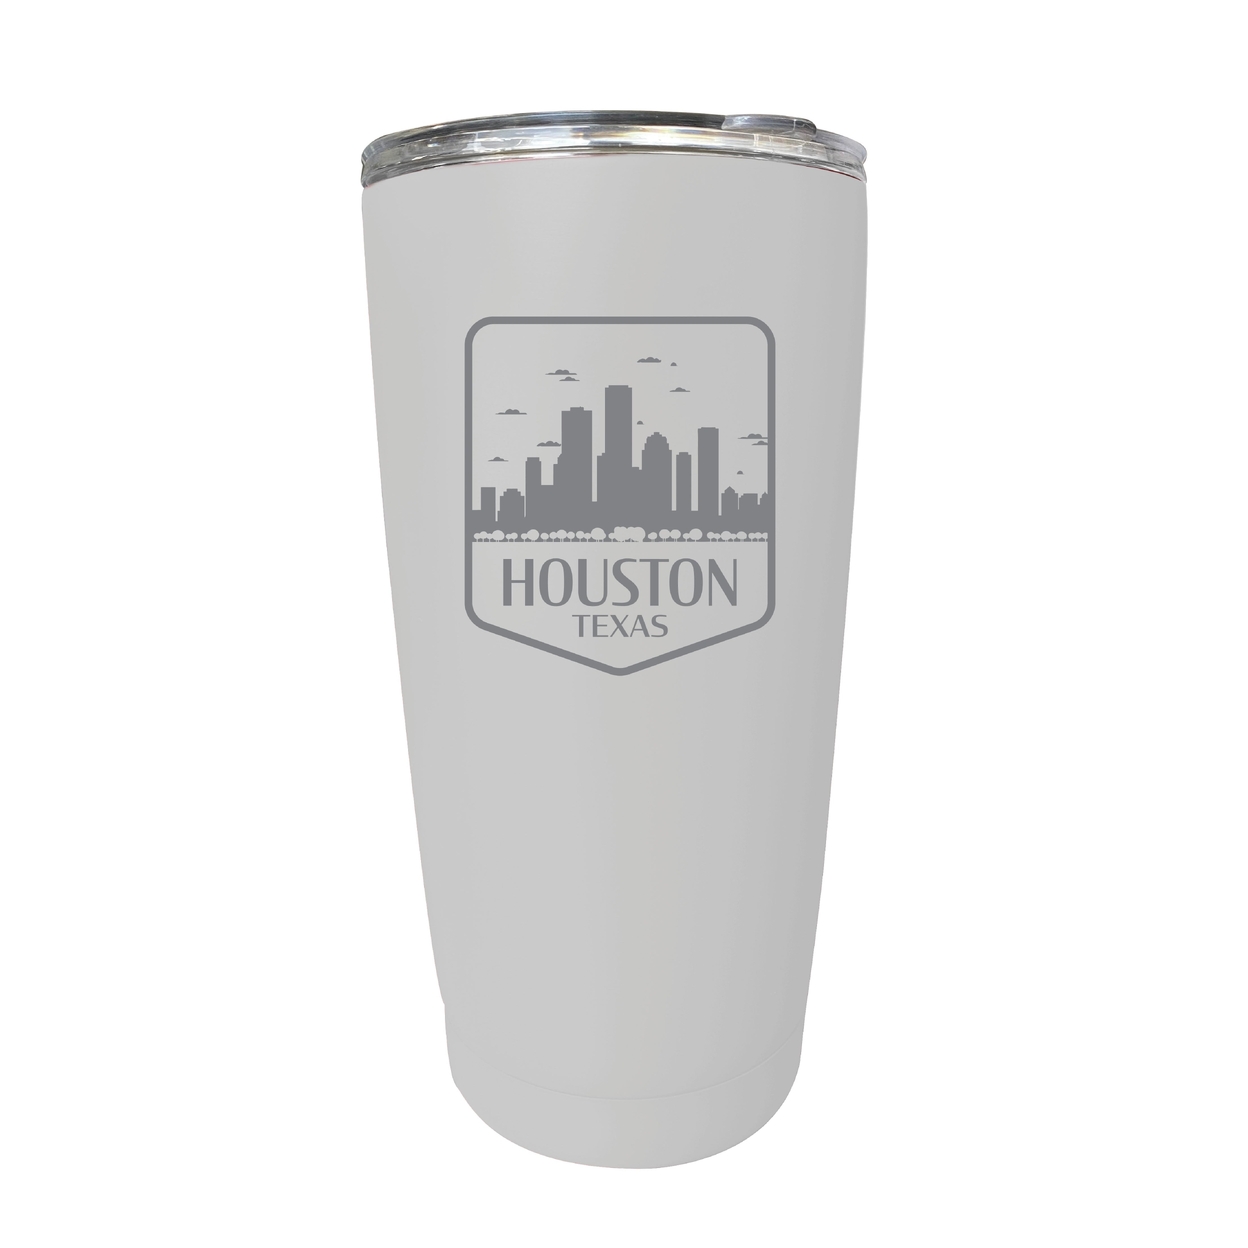 Houston Texas Souvenir 16 Oz Engraved Stainless Steel Insulated Tumbler - Red,,Single Unit